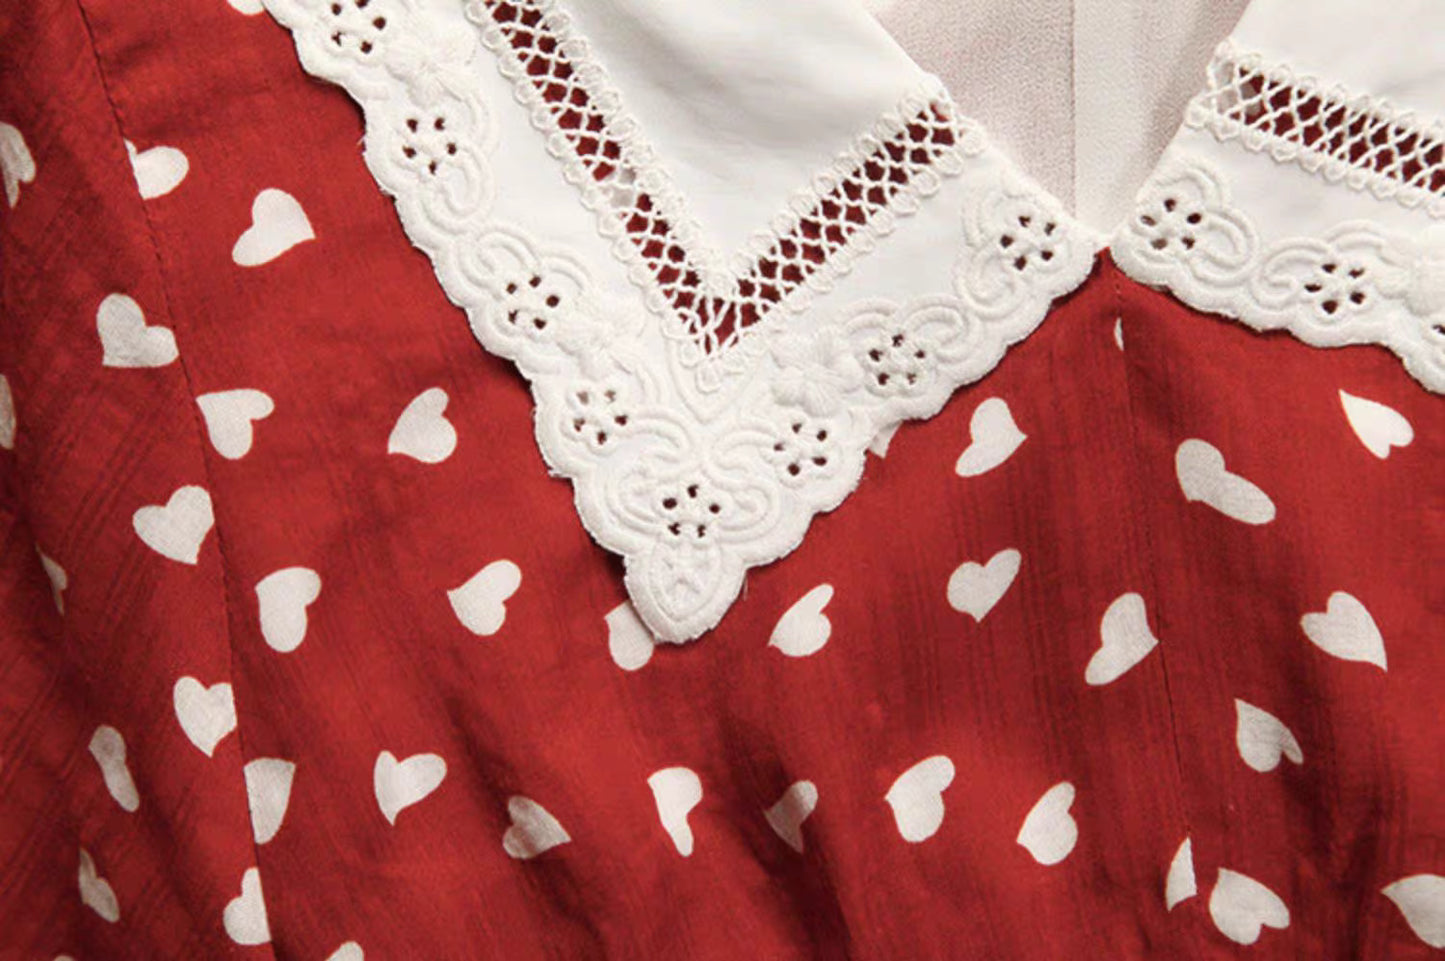 contrast collar red polka dot dress 